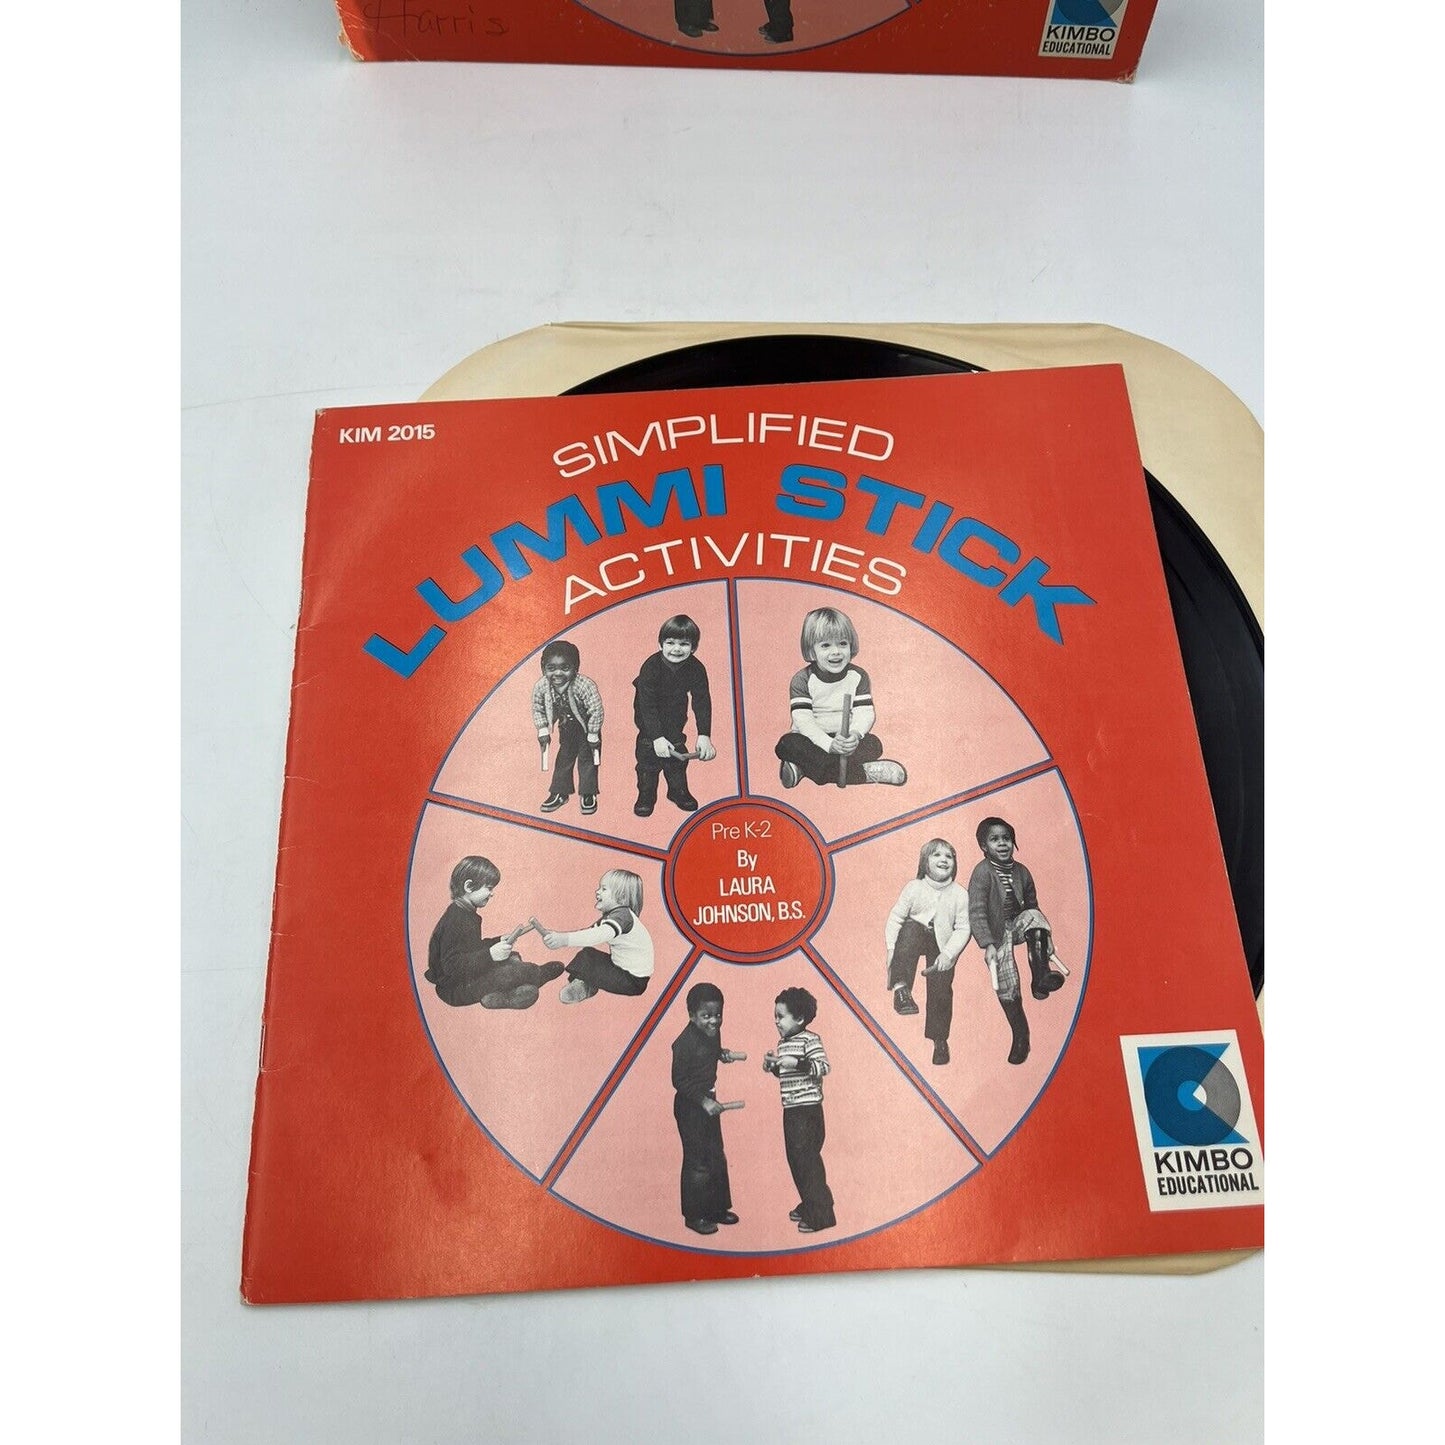 1976 Long Branch New Jersey Kimbo Lummi Stick Activities Vinyl LP Record & Book